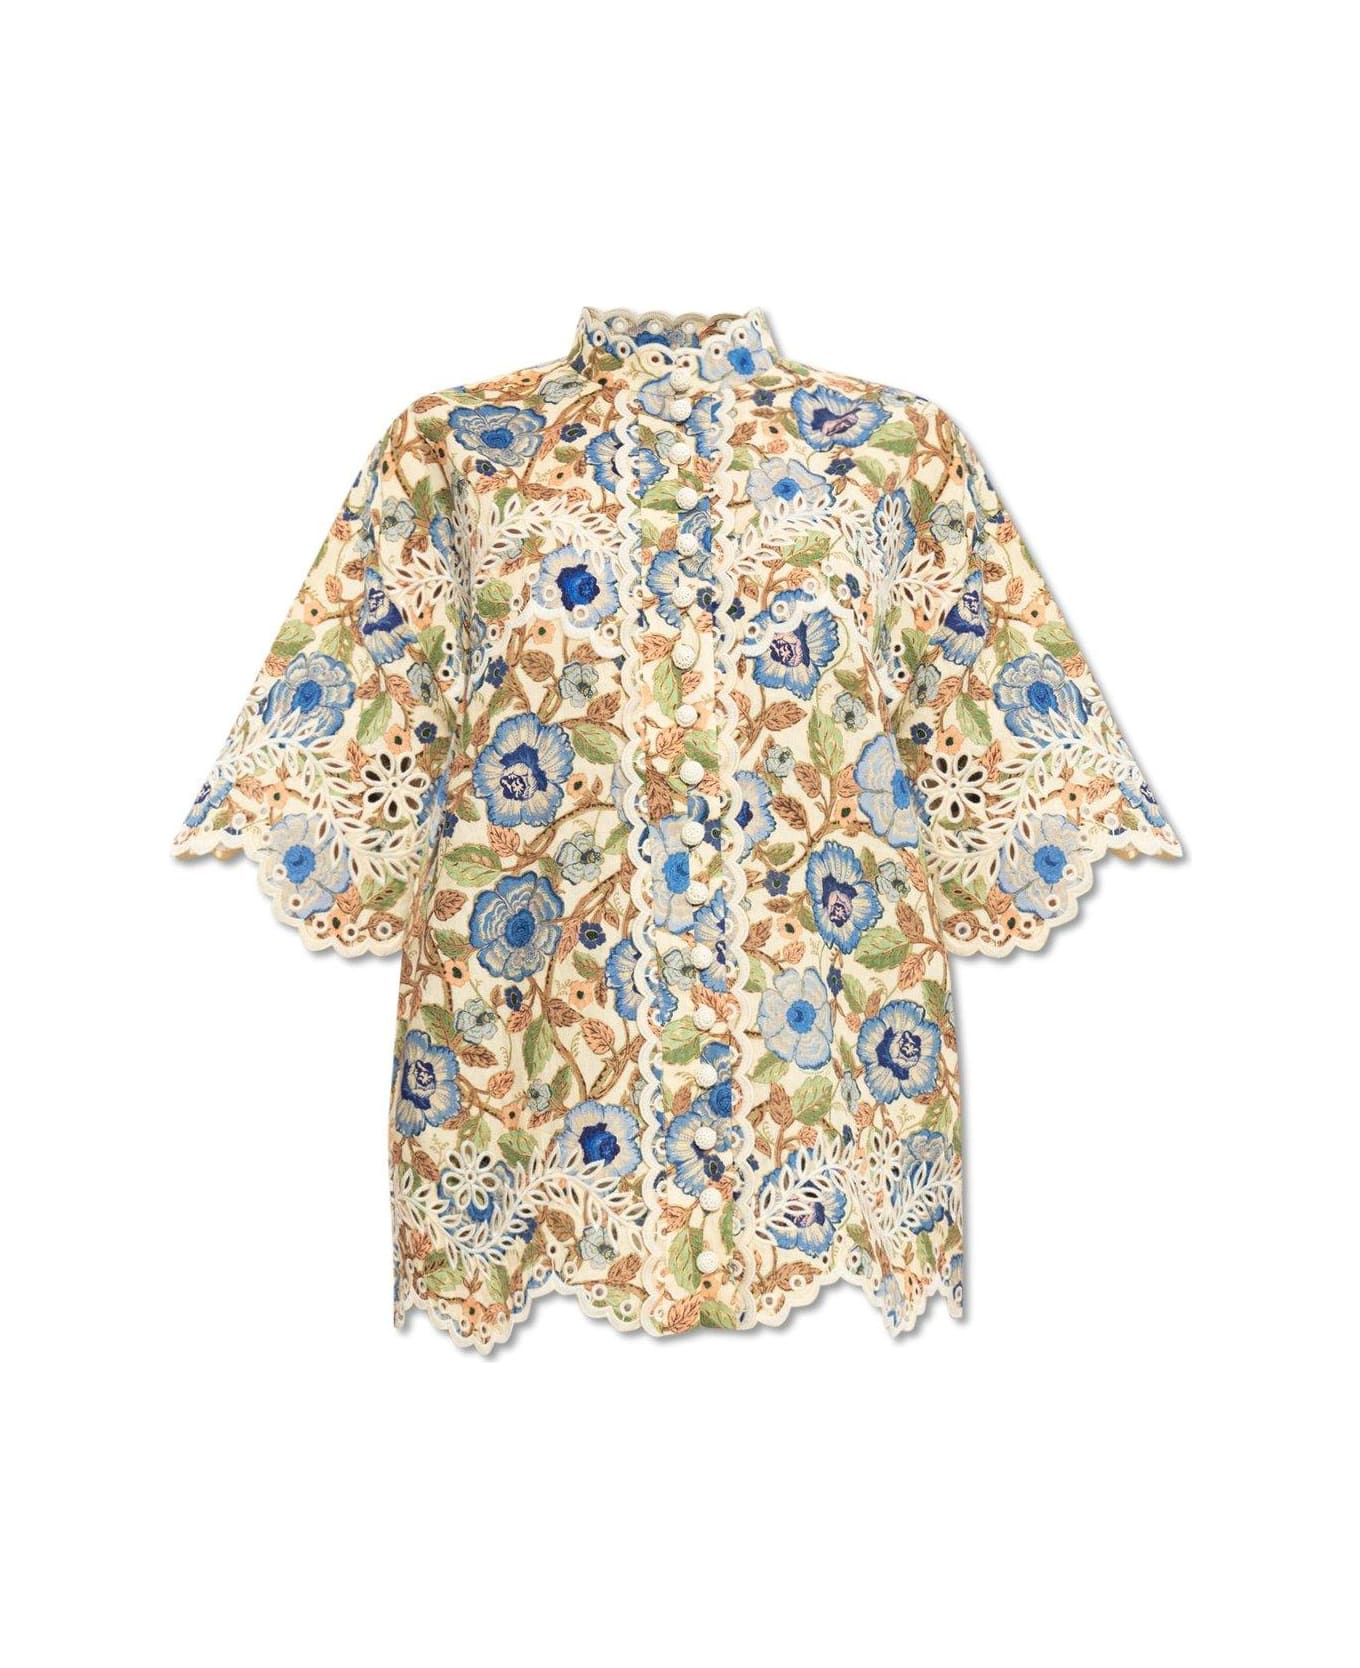 Zimmermann Junie Embroidered Short-sleeved Shirt - Ivobf Ivory Blue Floral シャツ